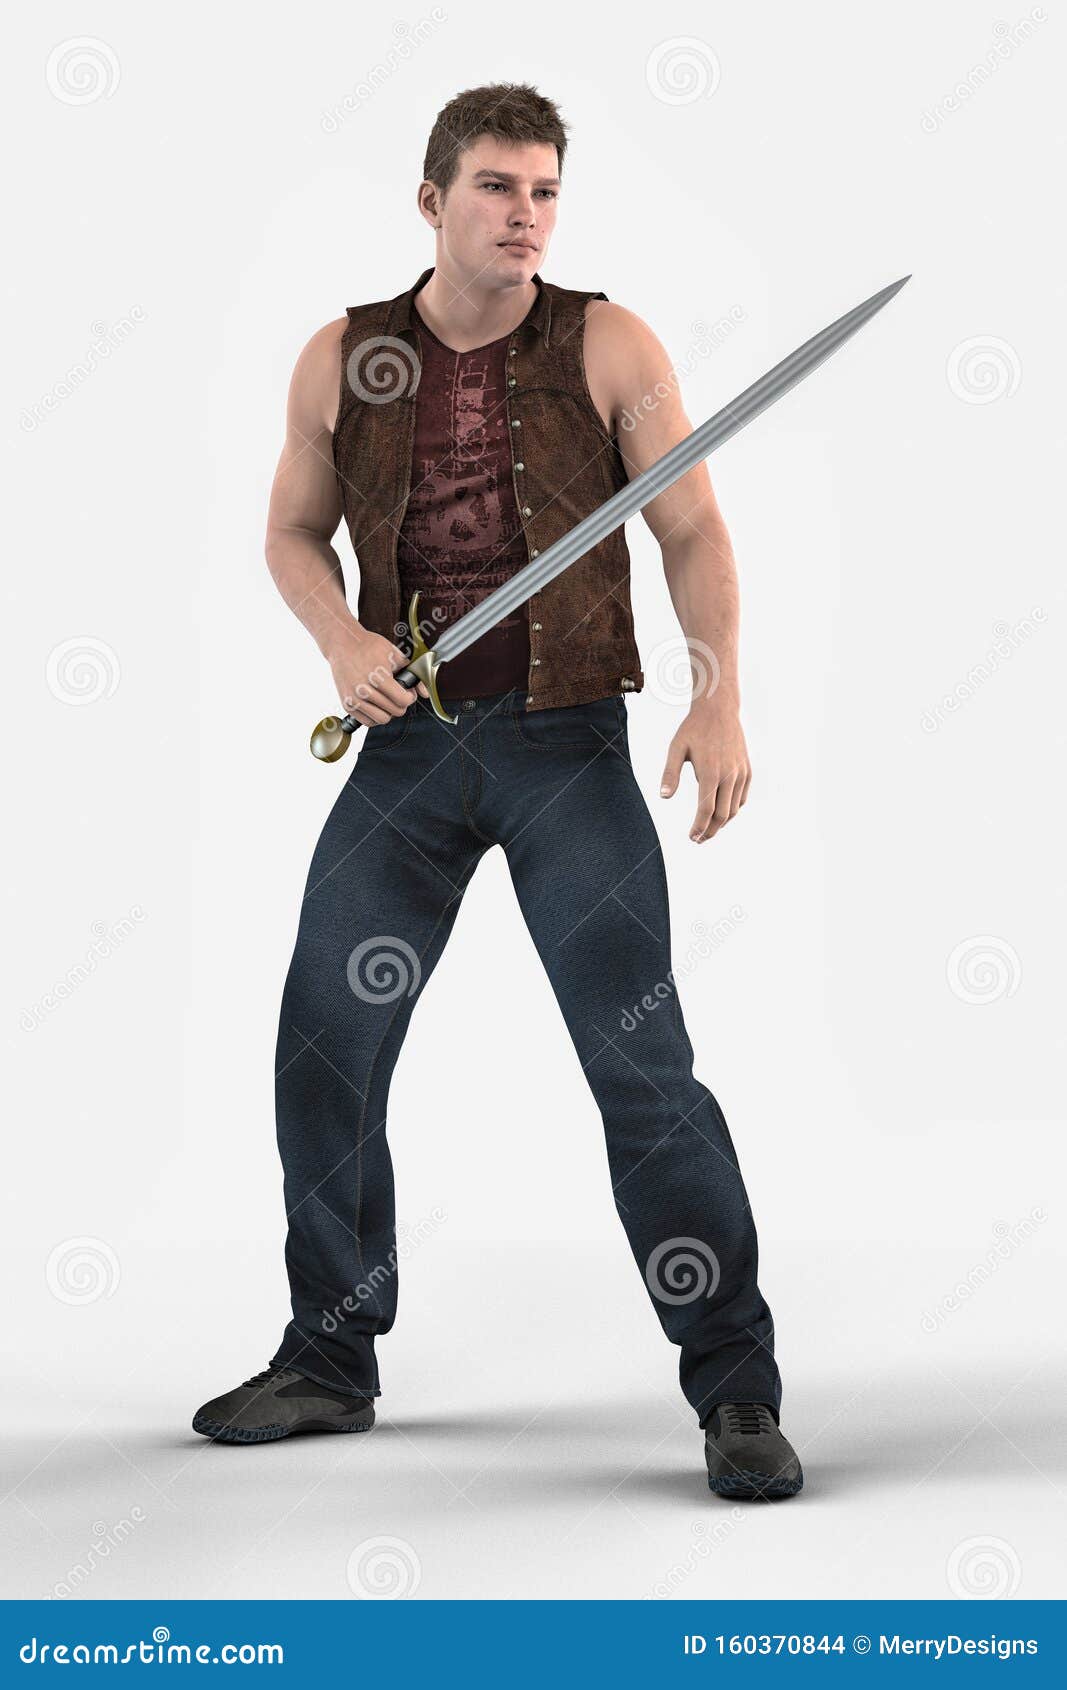 Holding Sword